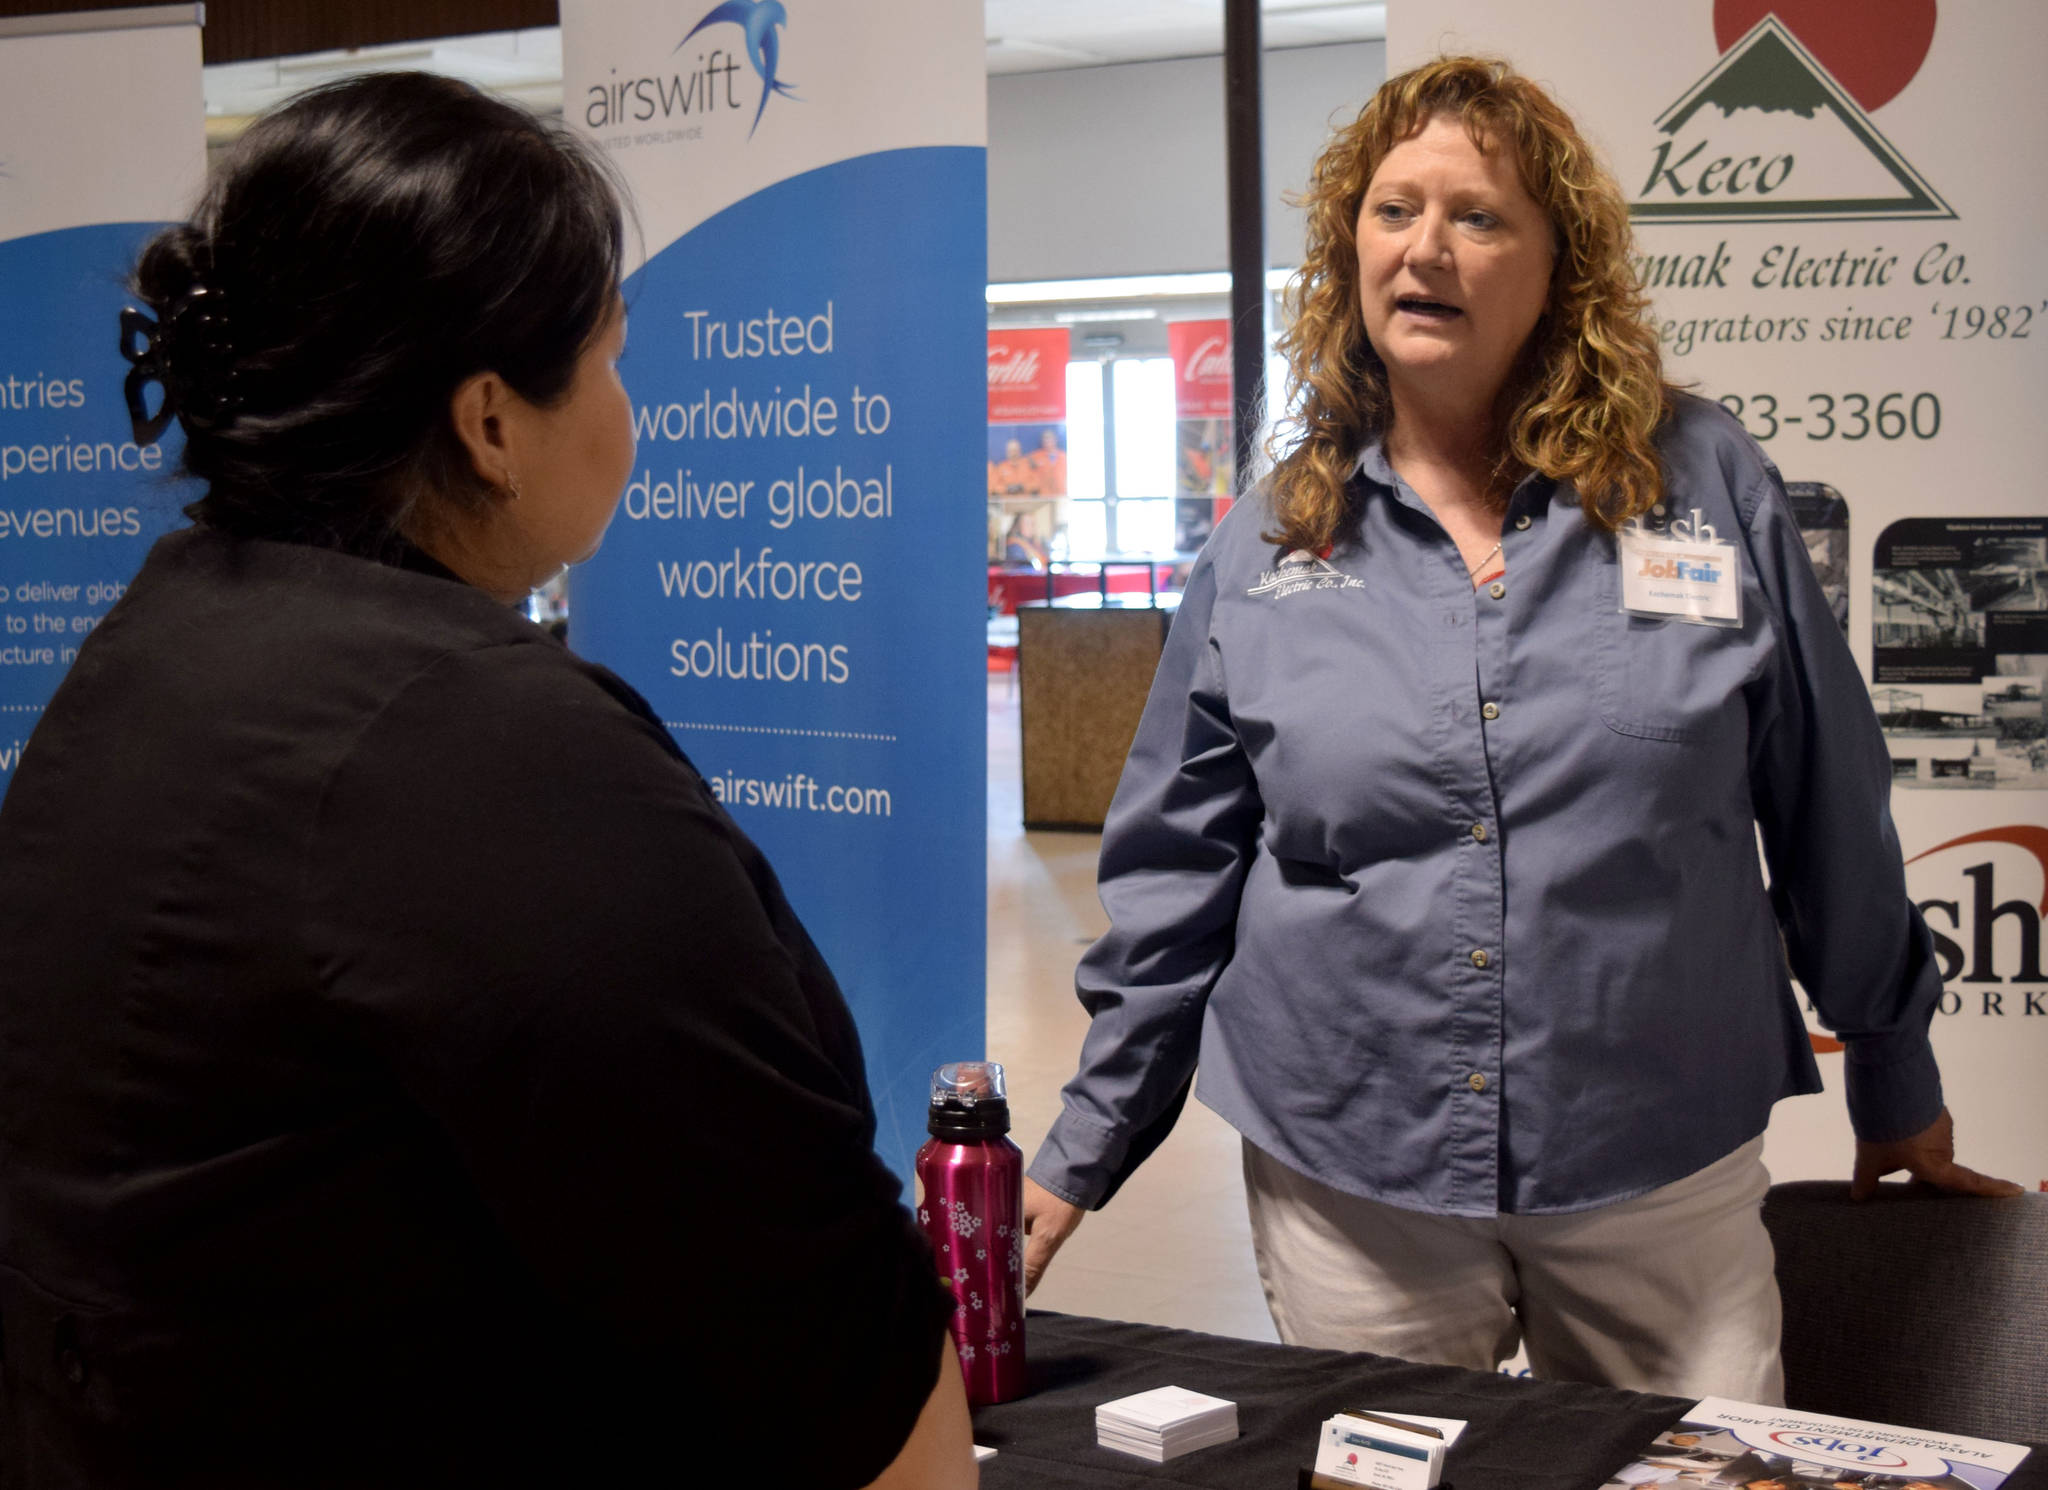 Gina Keith, office manager at Kachemak Electric, spoke with job seekers on March 22 at Kenai Peninsula Job Fair held at Peninsula Job Center. (Kat Sorensen/Peninsula Clarion)